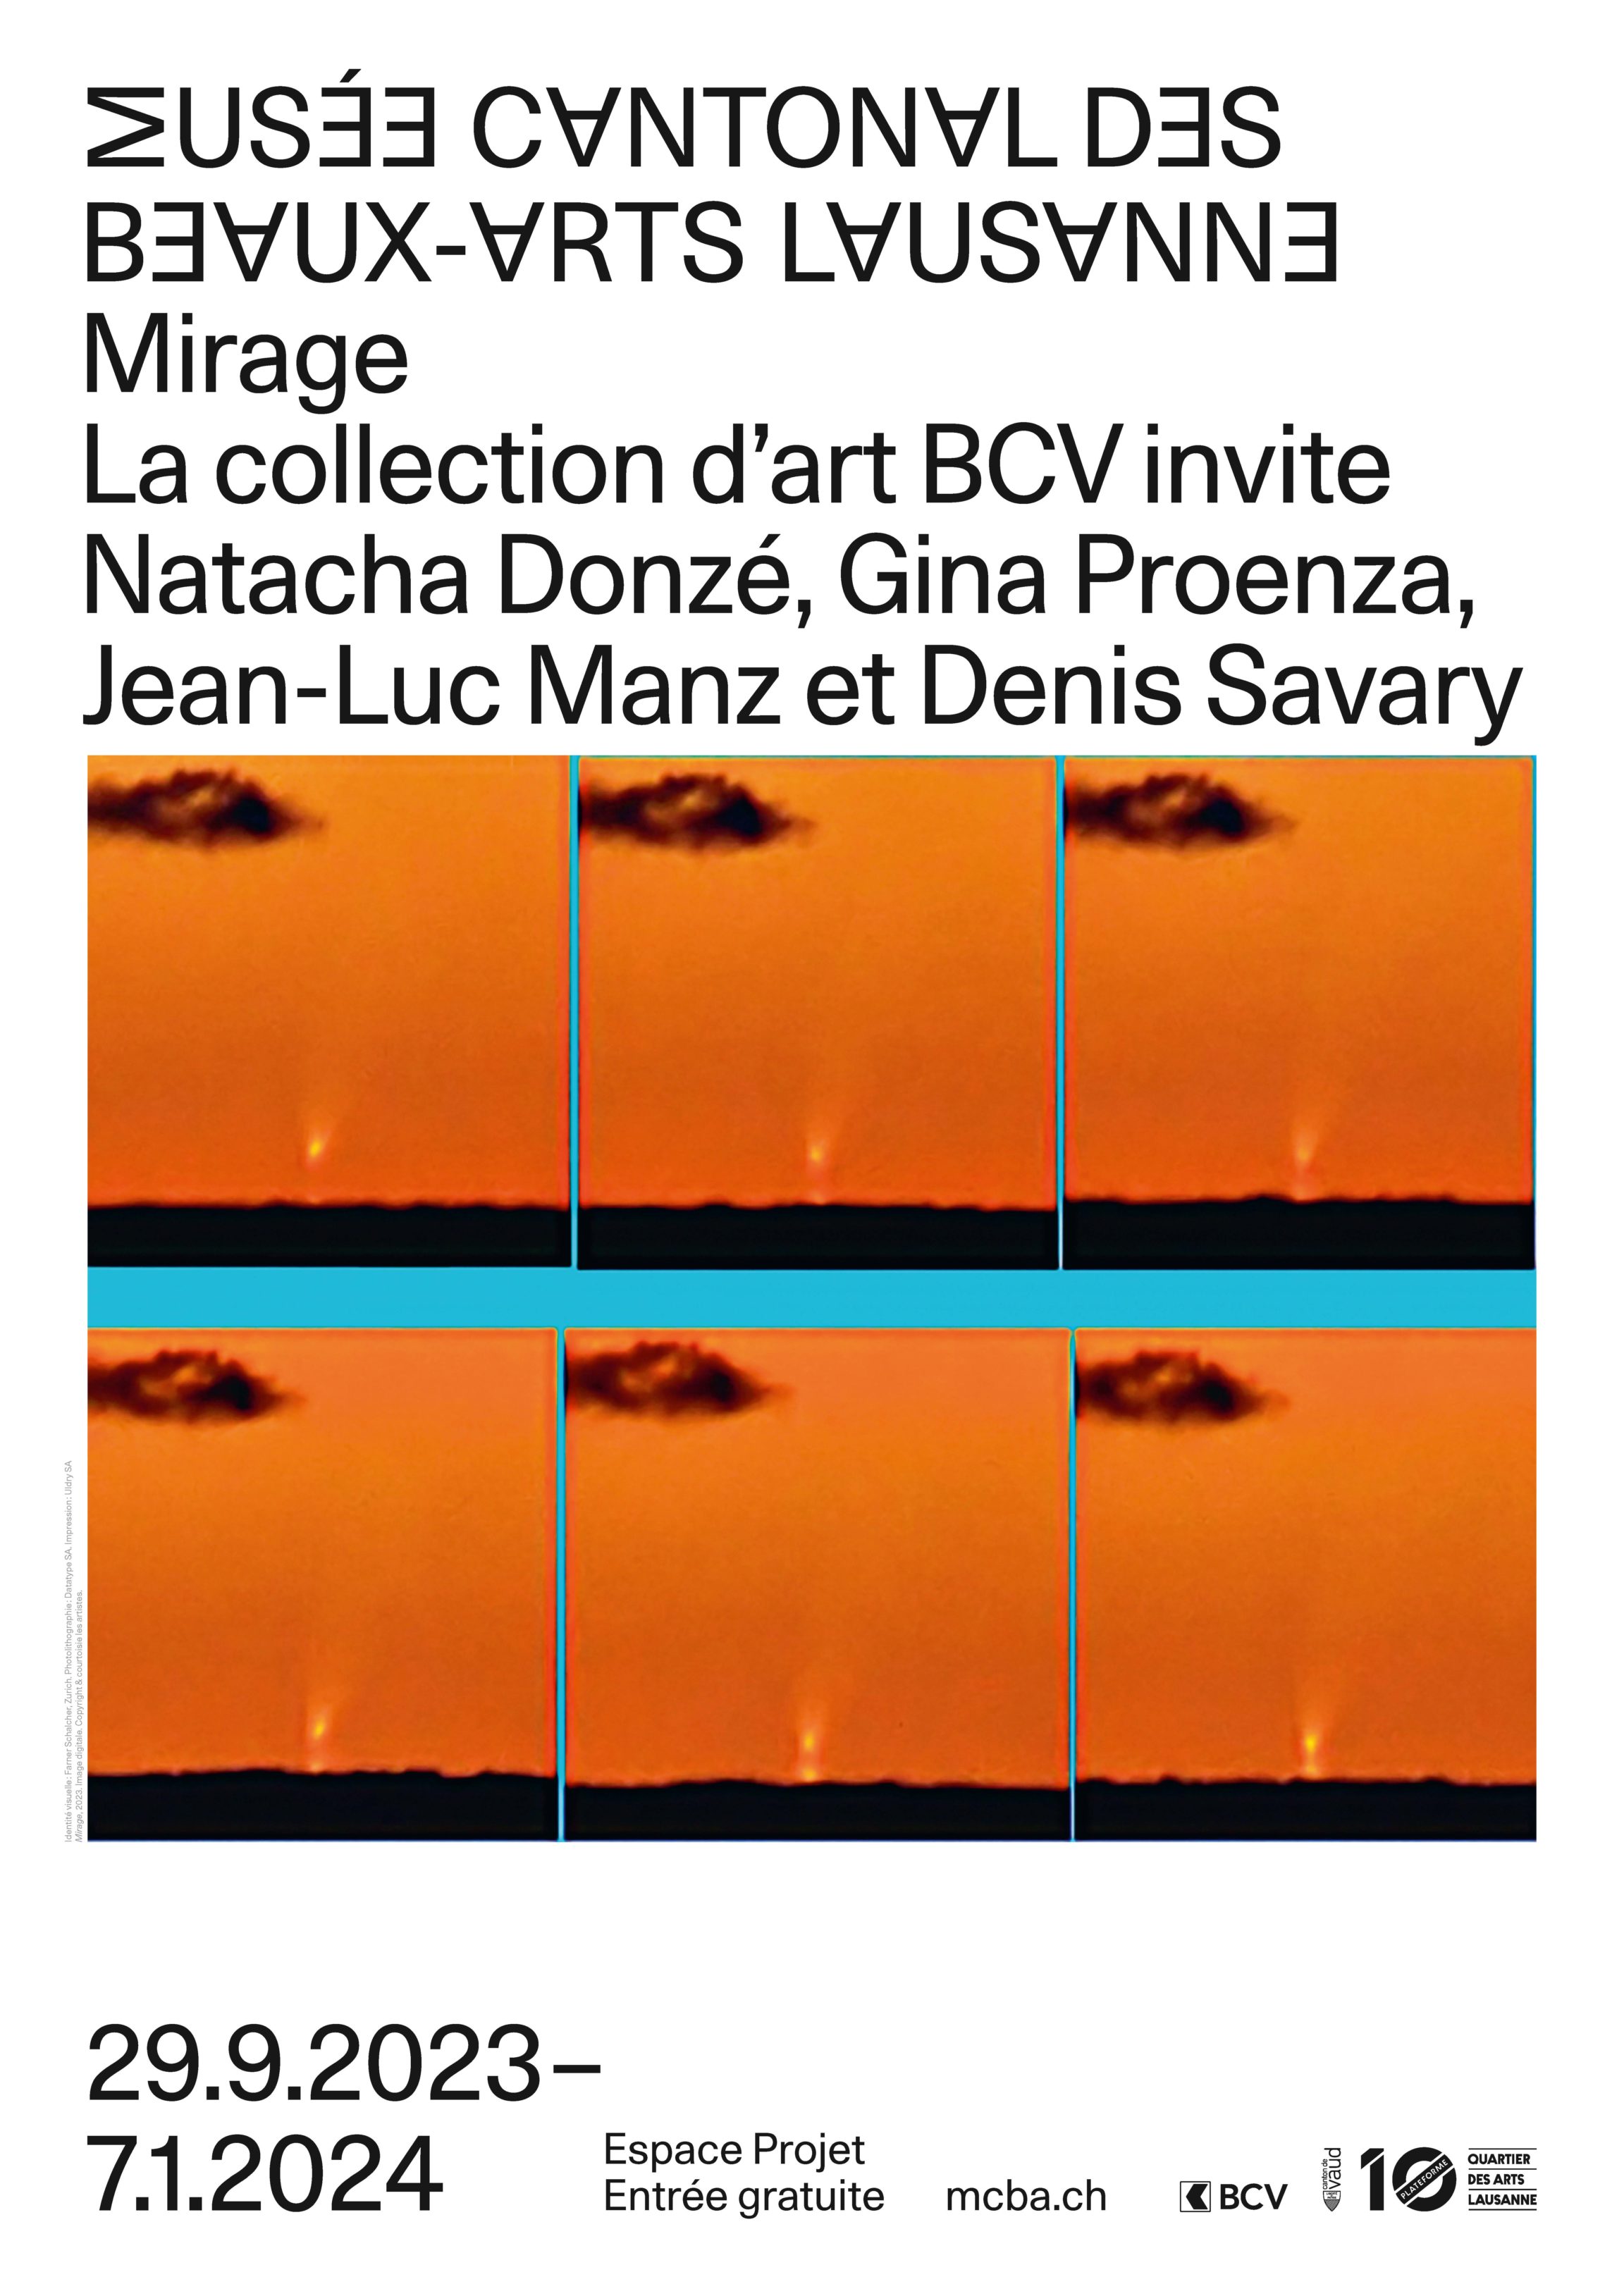 Mirage The BCV Art Collection invites Natacha Donzé, Gina Proenza, Jean-Luc Manz, and Denis Savary